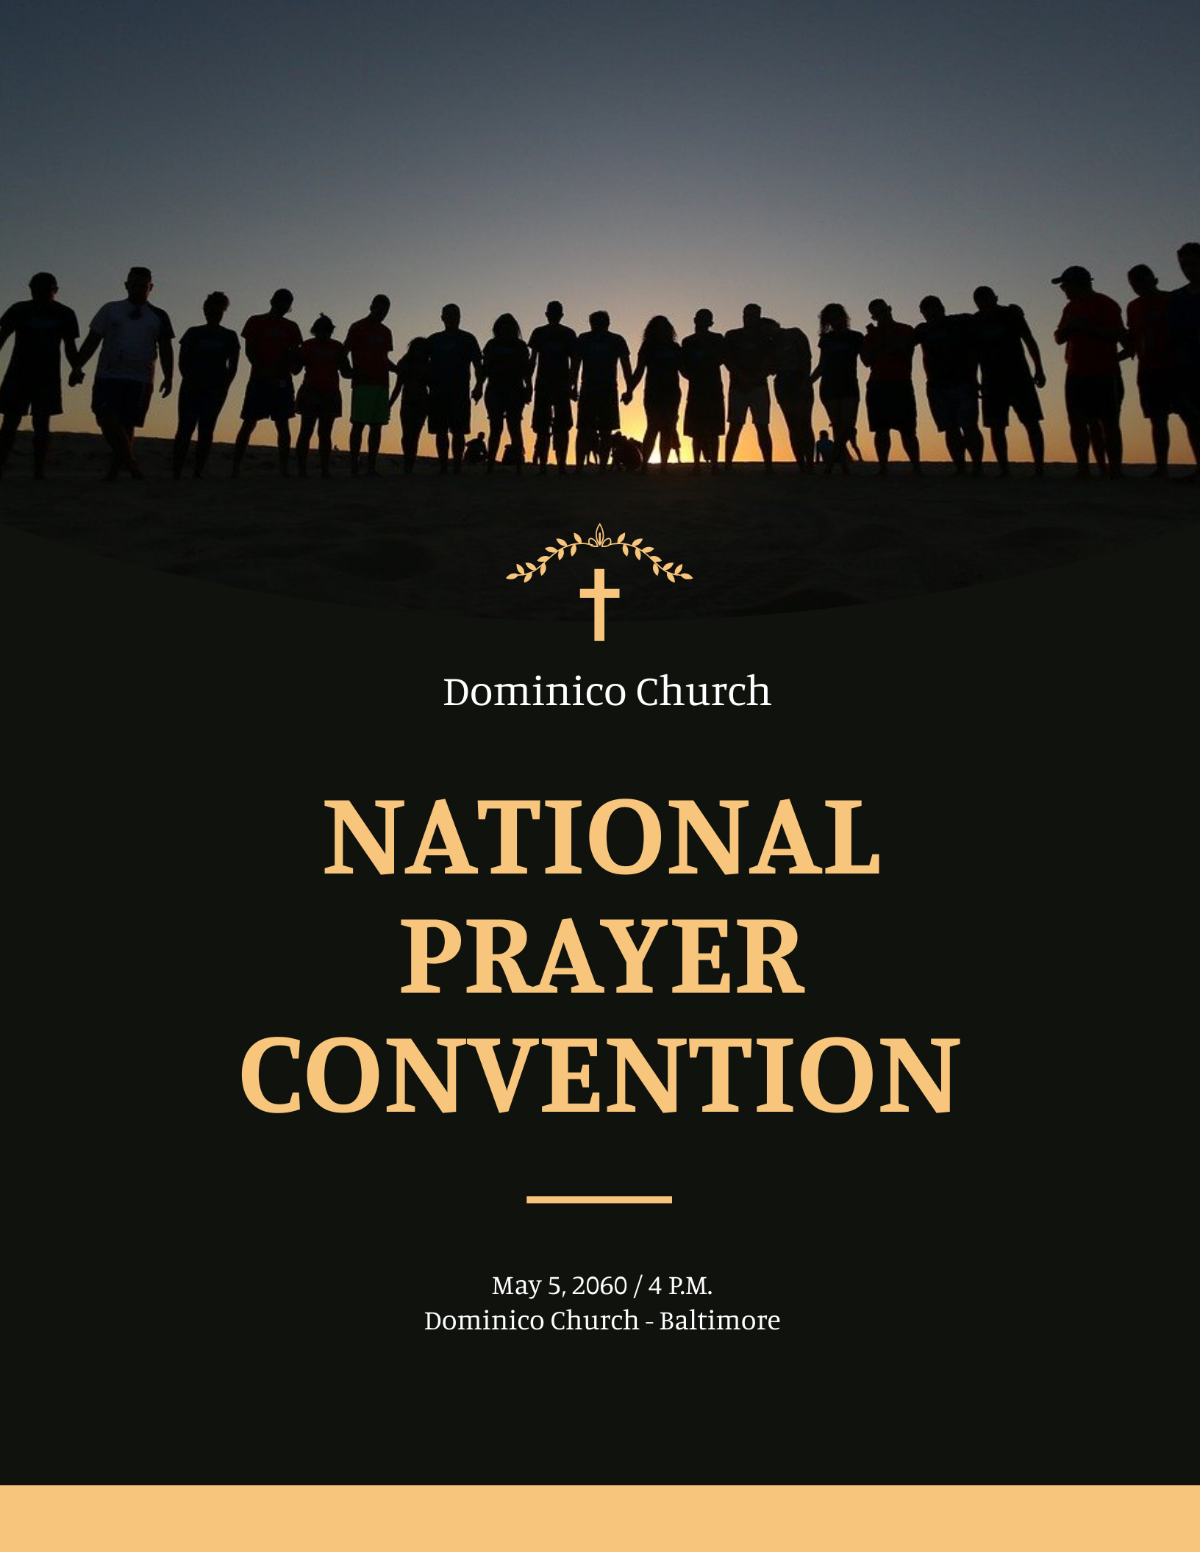 National Prayer Convention Flyer